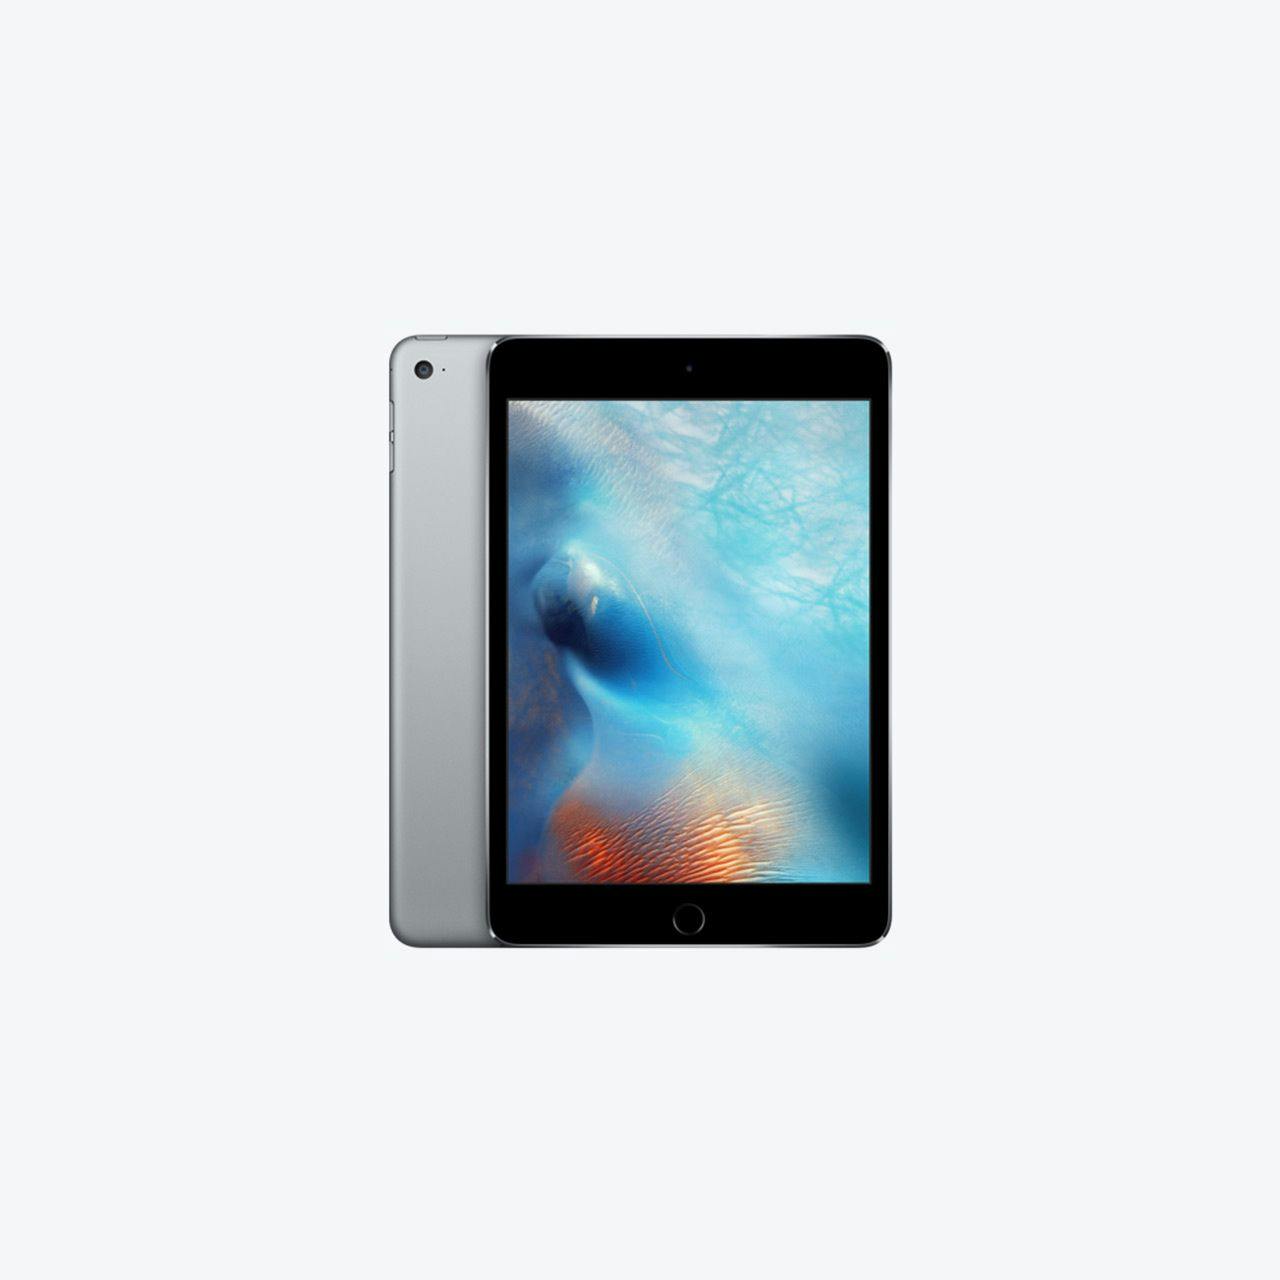 Image of iPad mini 4.